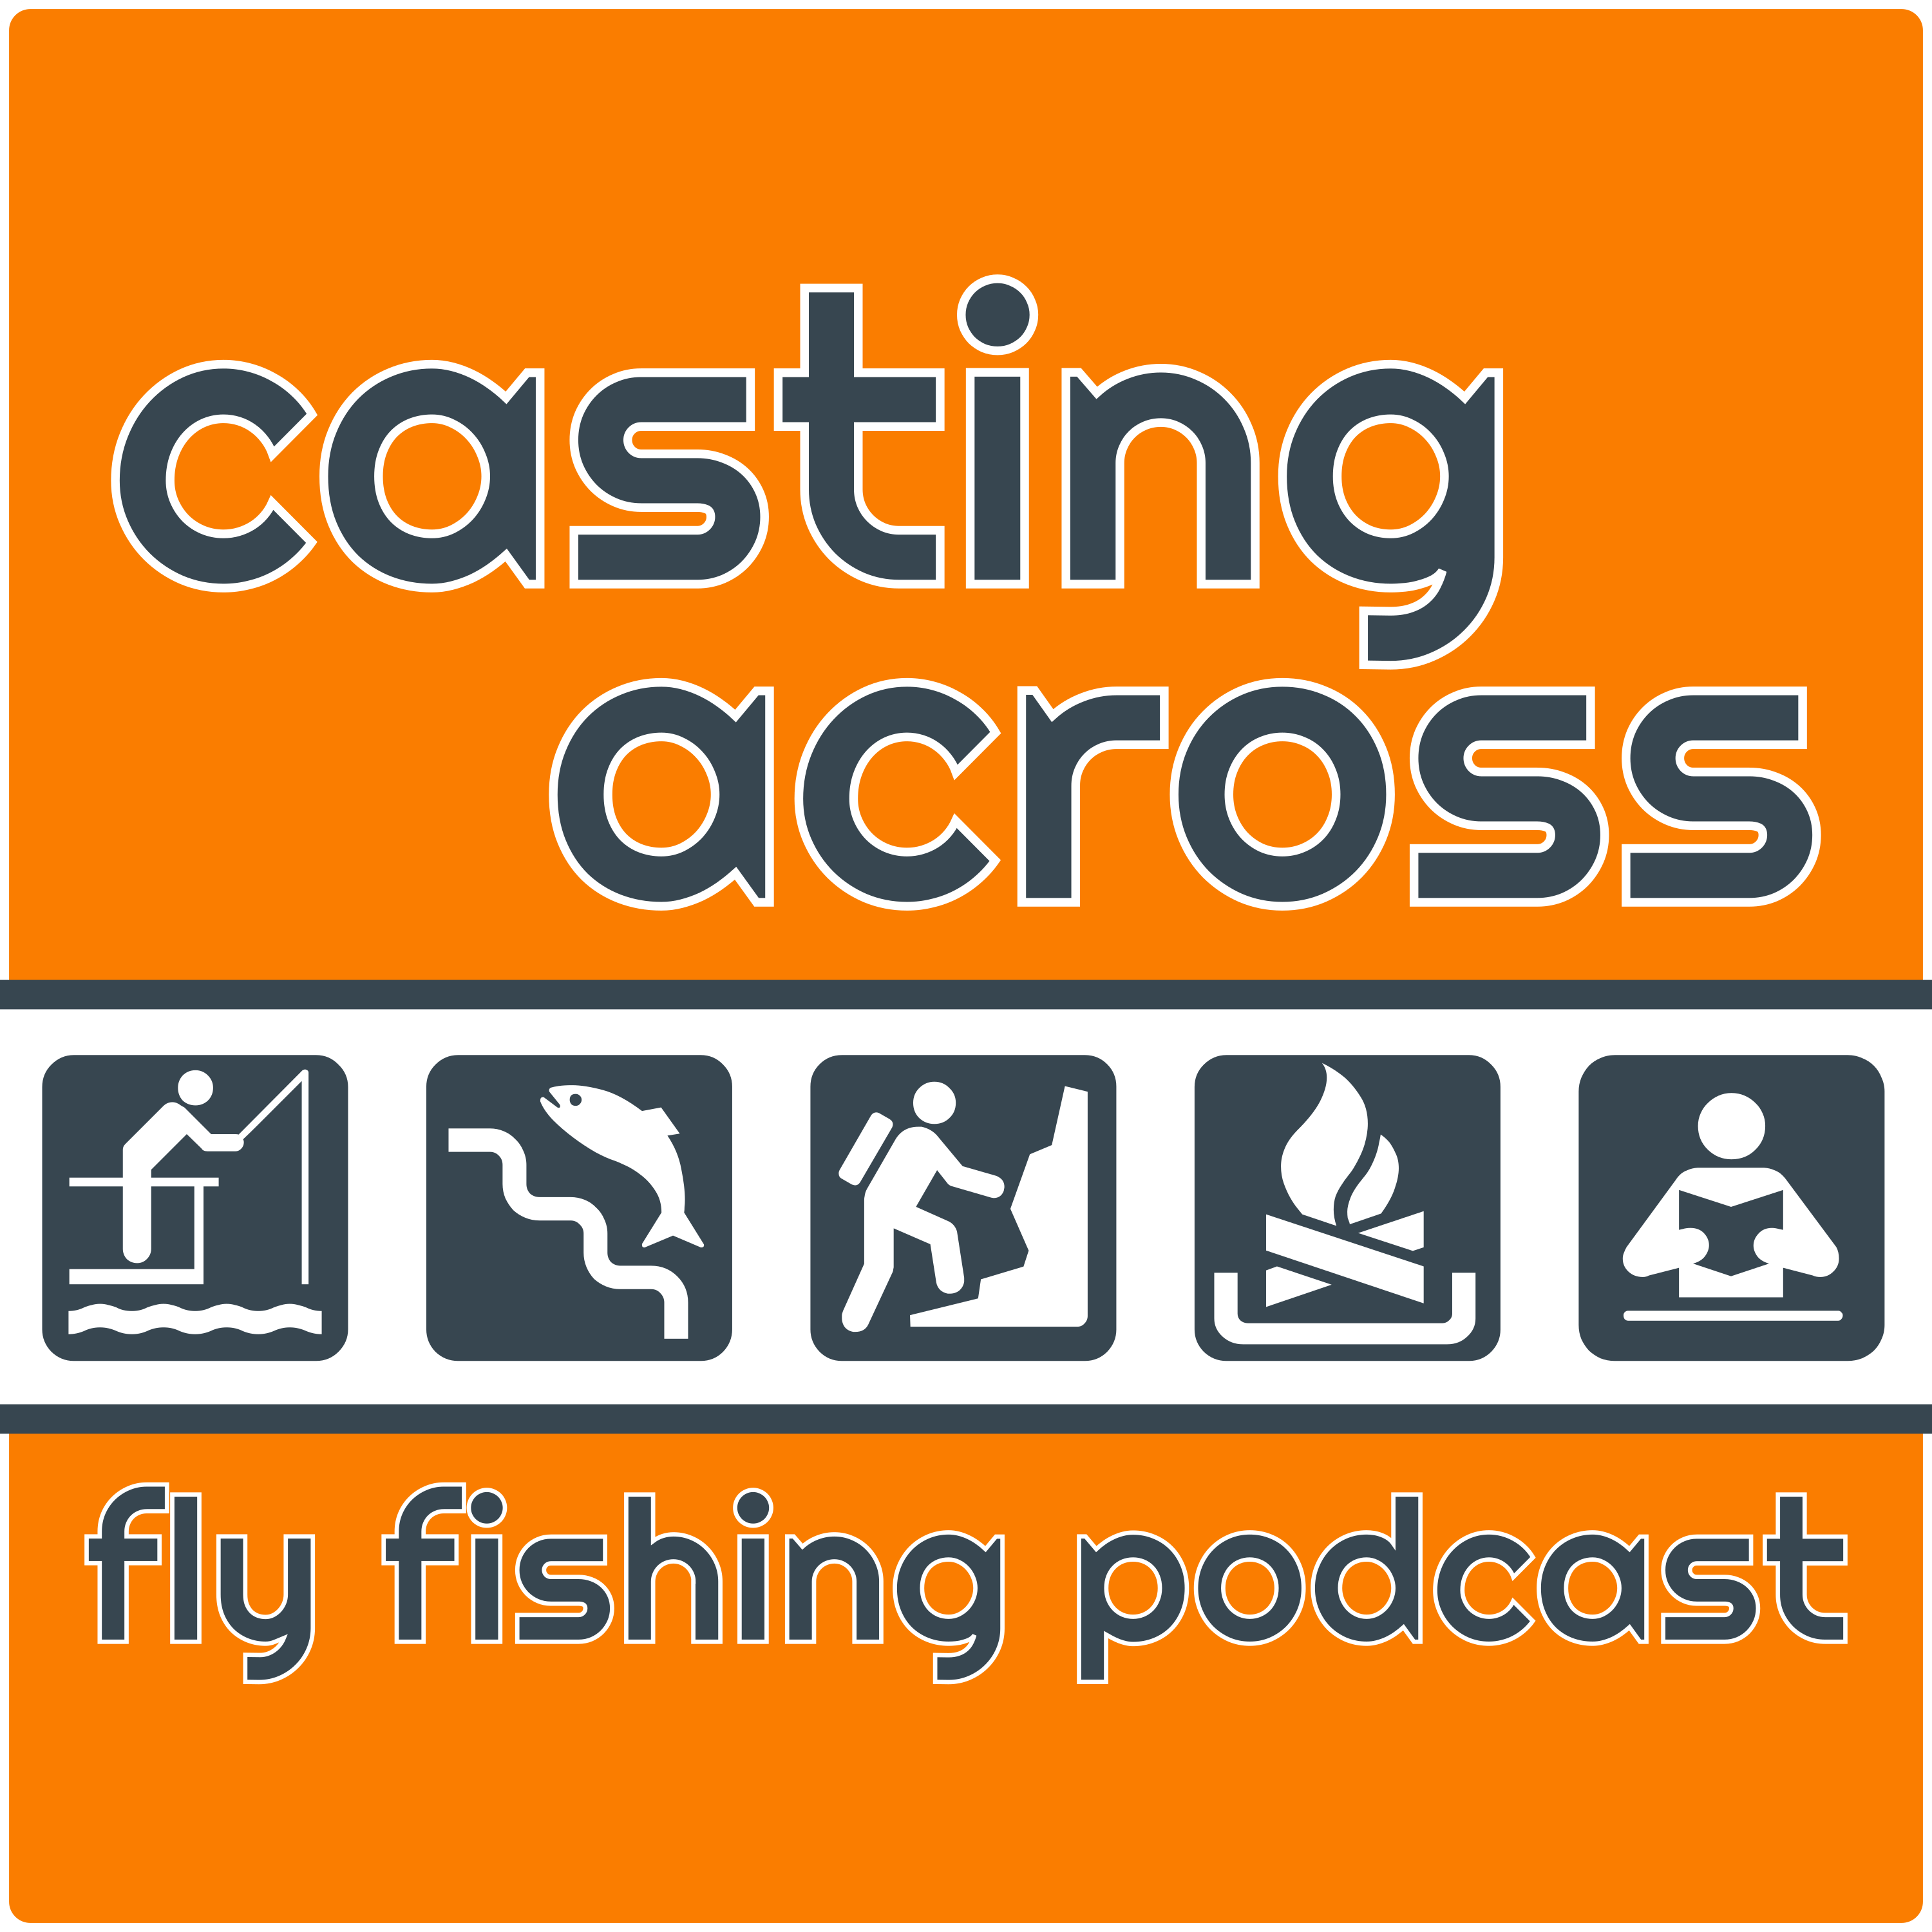 Fly Fishing Writing, Speaking, & Voting